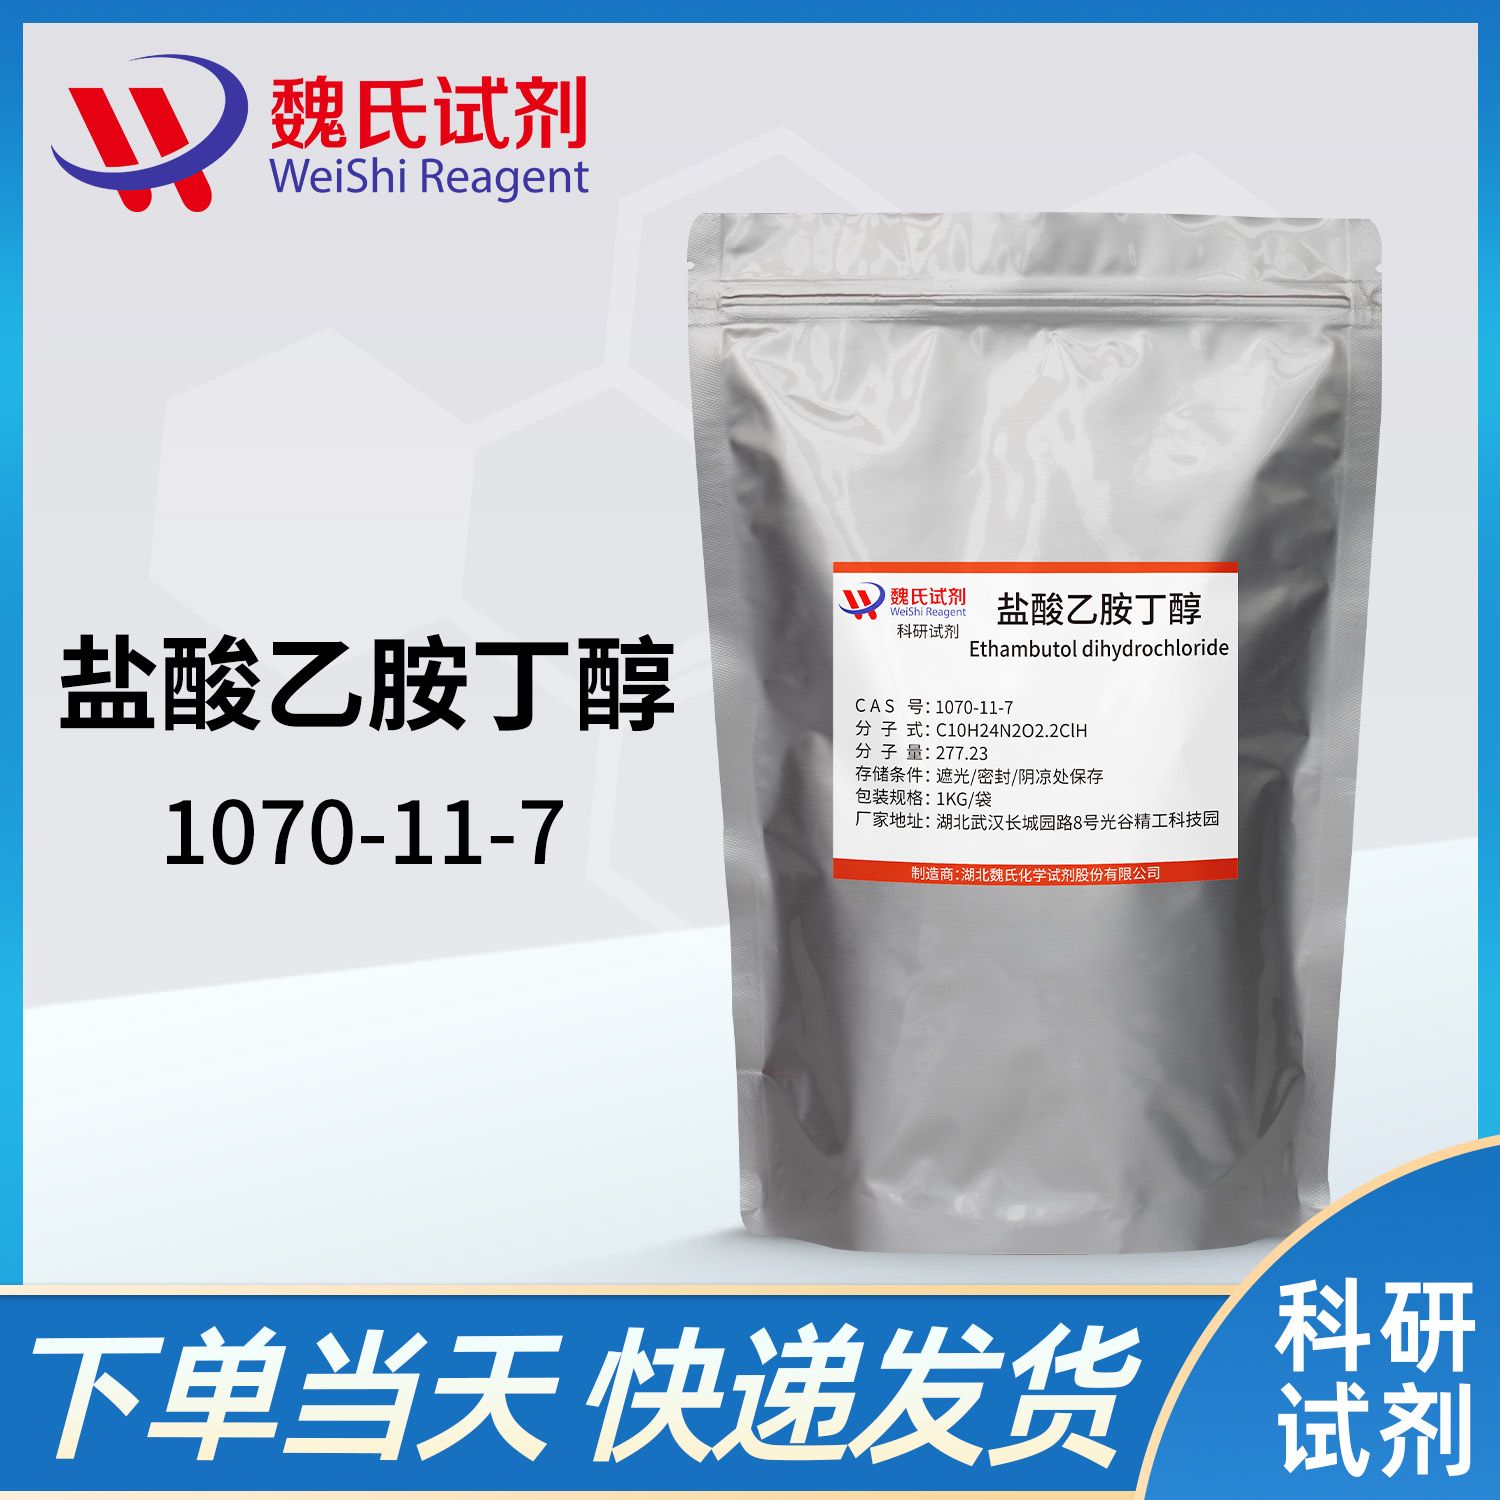 1070-11-7 /盐酸乙胺丁醇/Ethambutol dihydrochloride